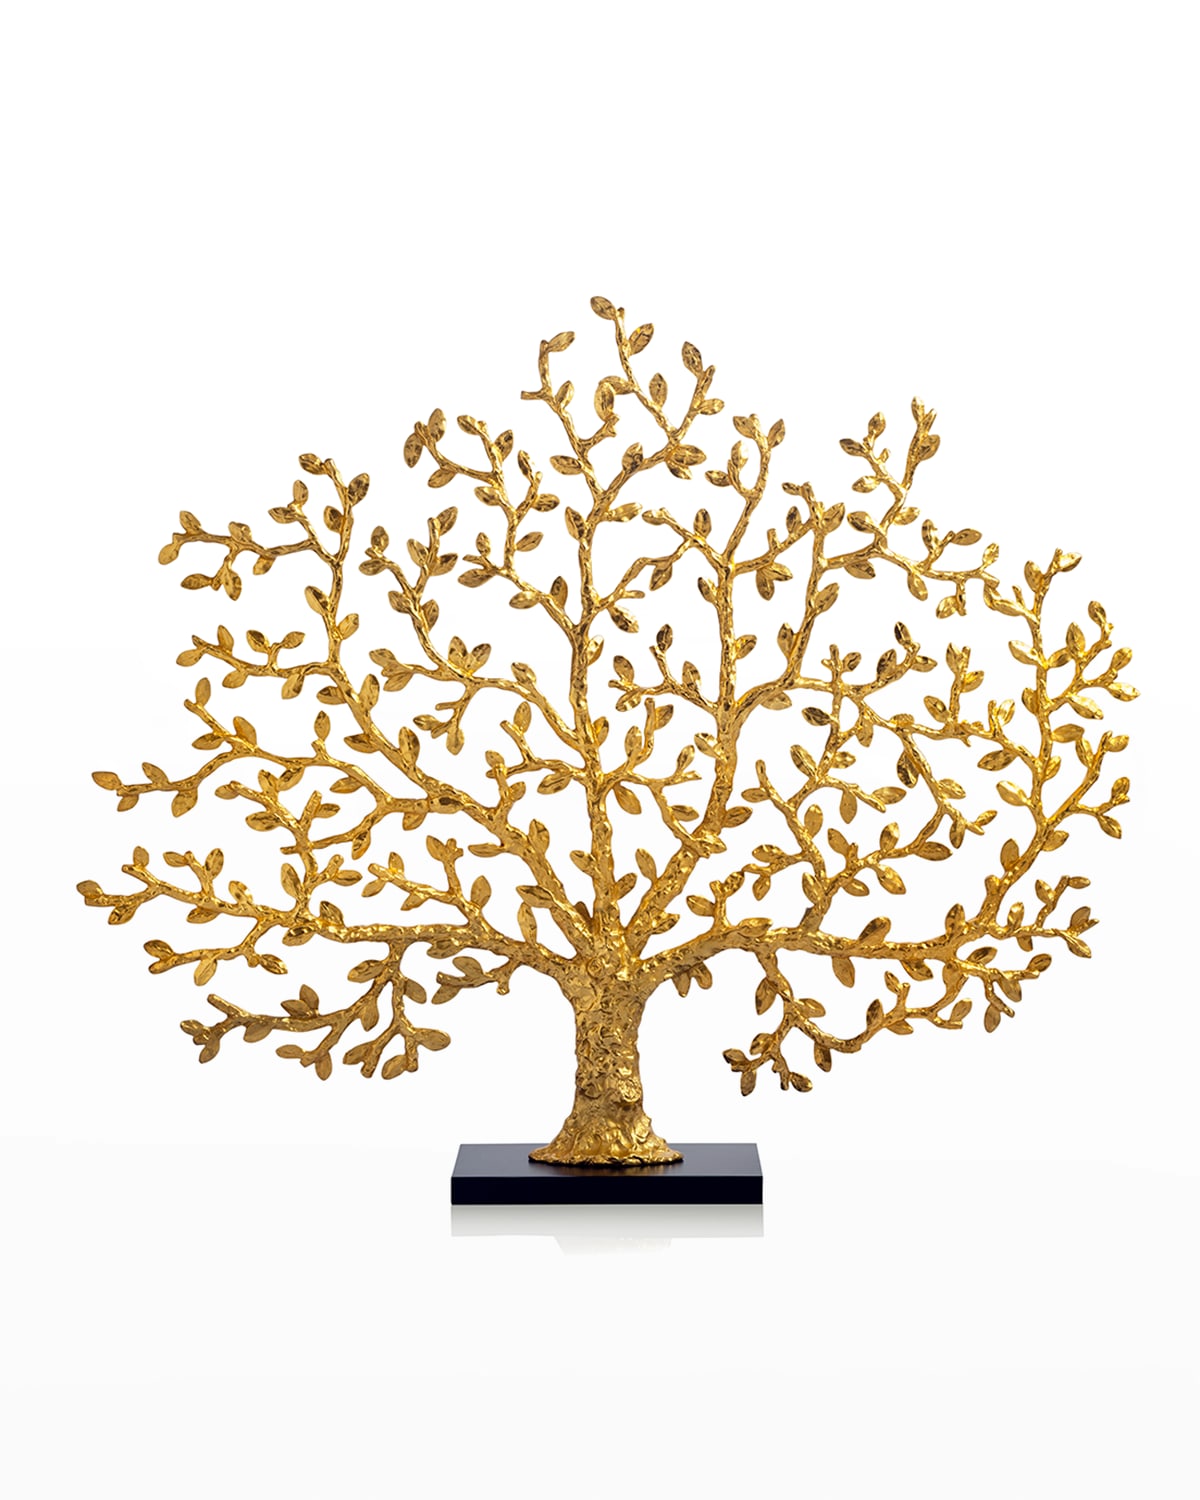 MICHAEL ARAM TREE OF LIFE GOLDEN FIREPLACE SCREEN